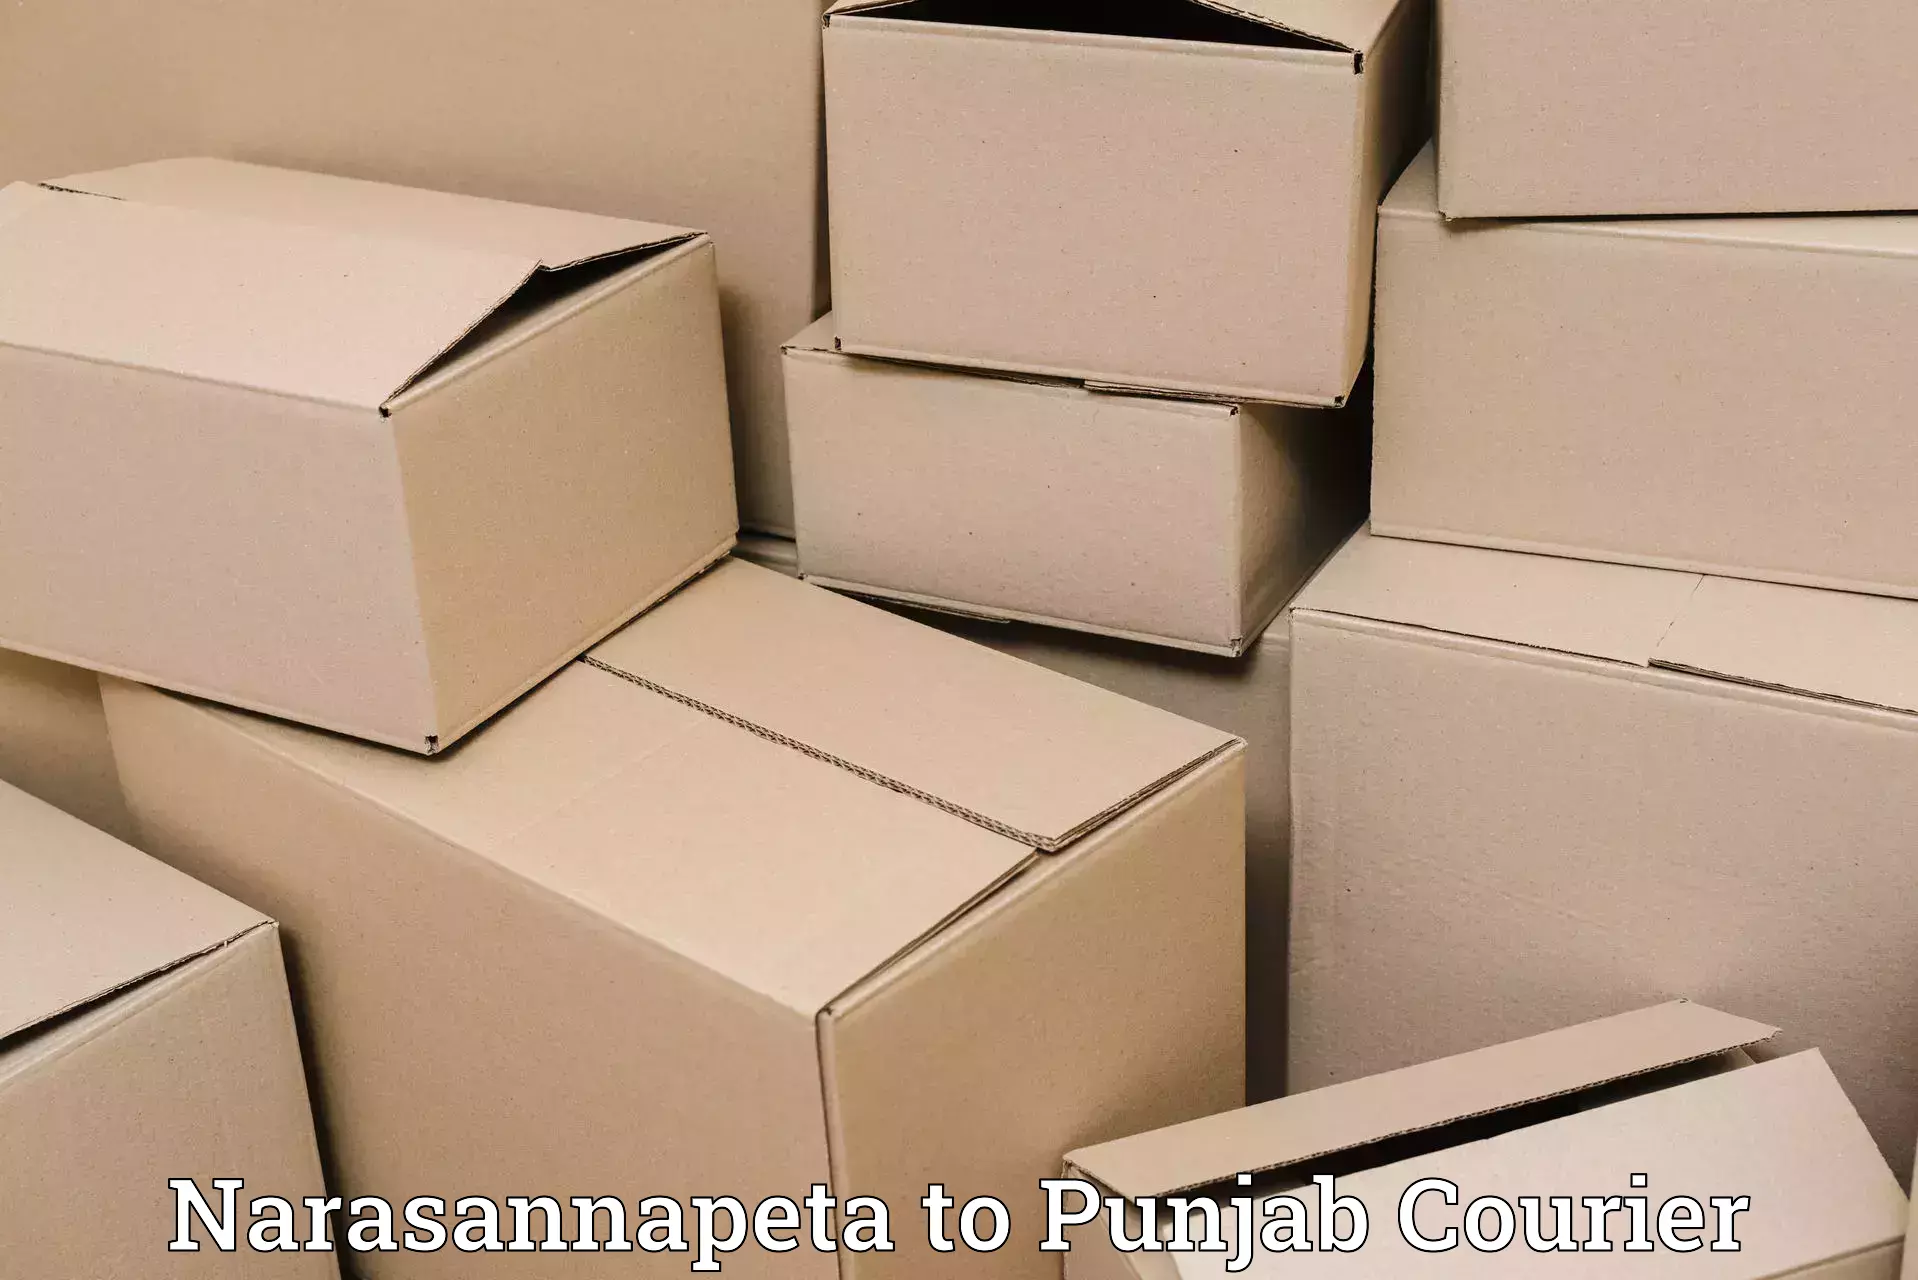 State-of-the-art courier technology Narasannapeta to Dera Bassi